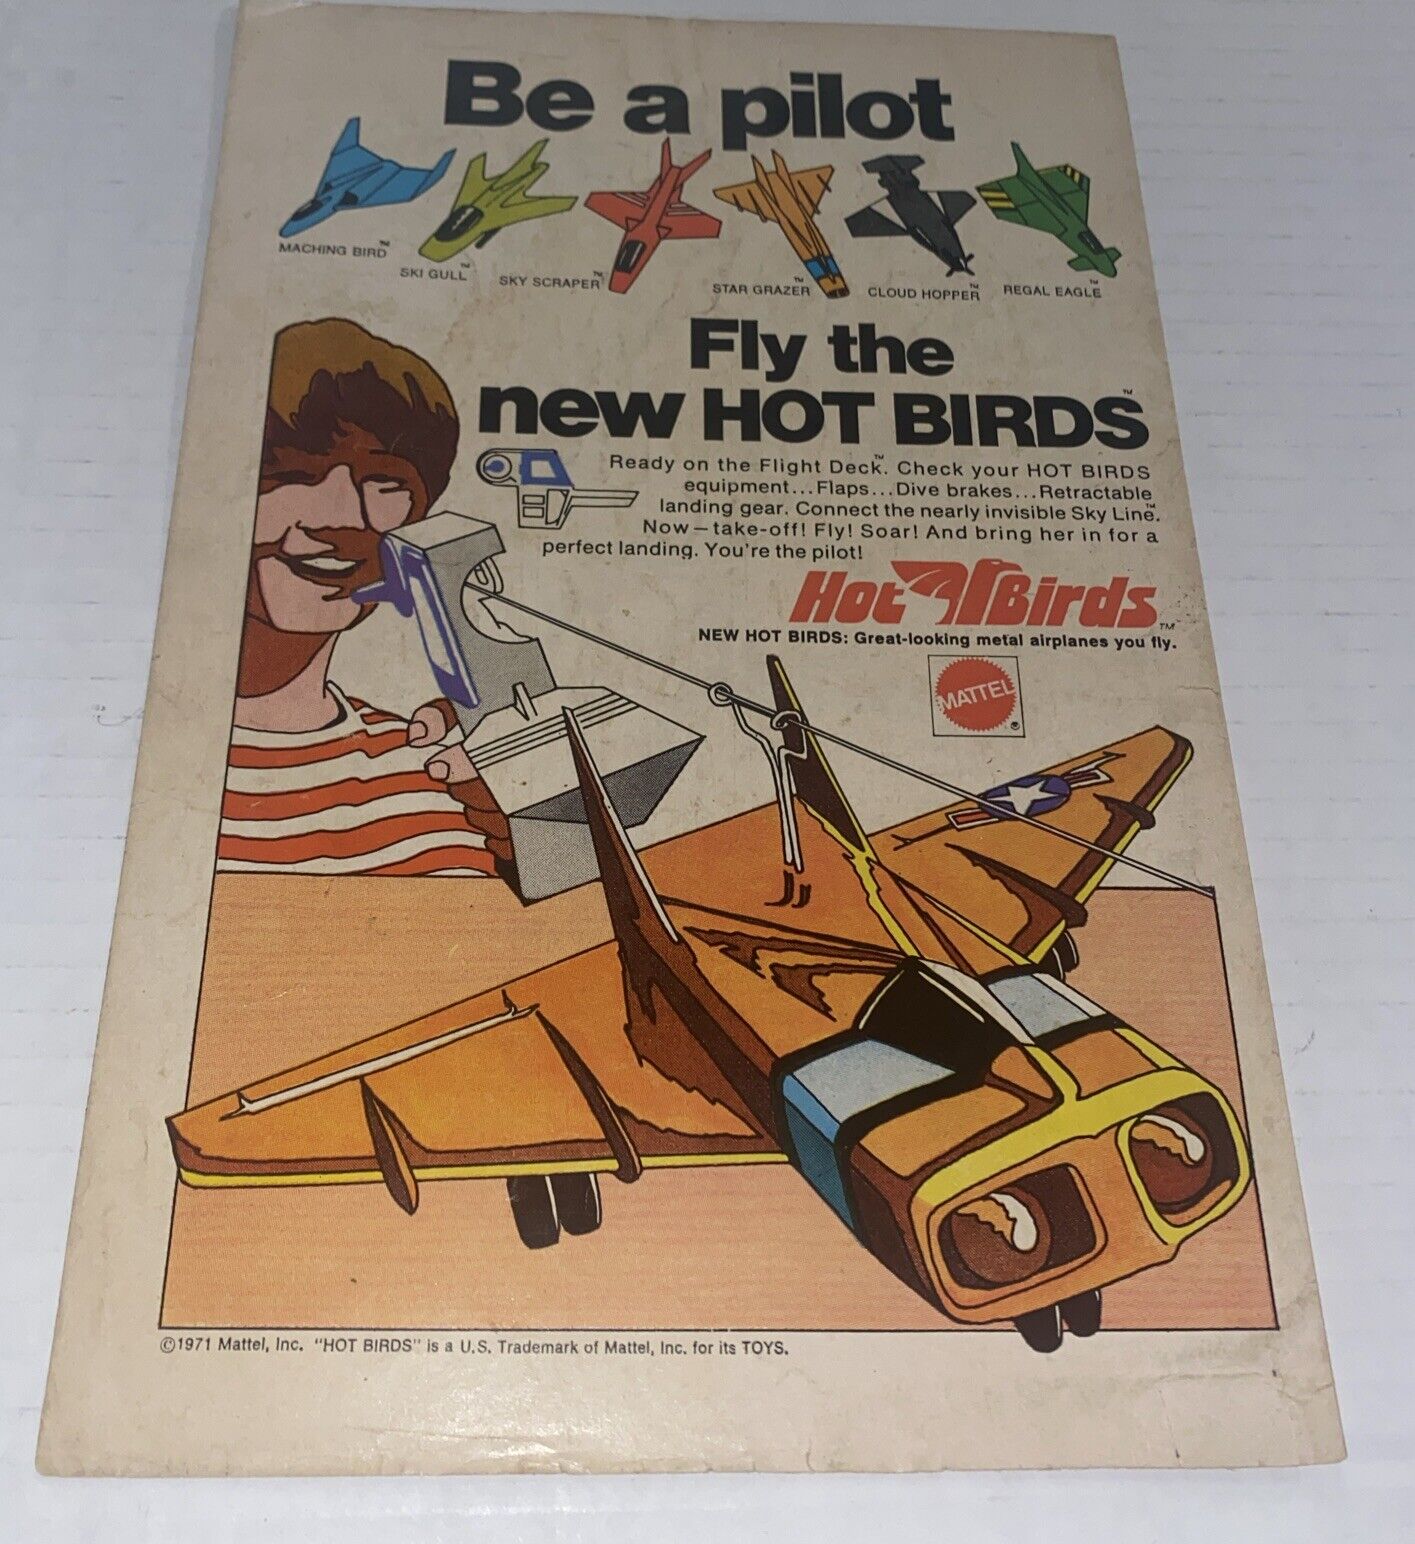 Vintage 1971 Mattel Hot Birds Toy PRINT AD Maching Bird Ski Gull Star Grazer Sky